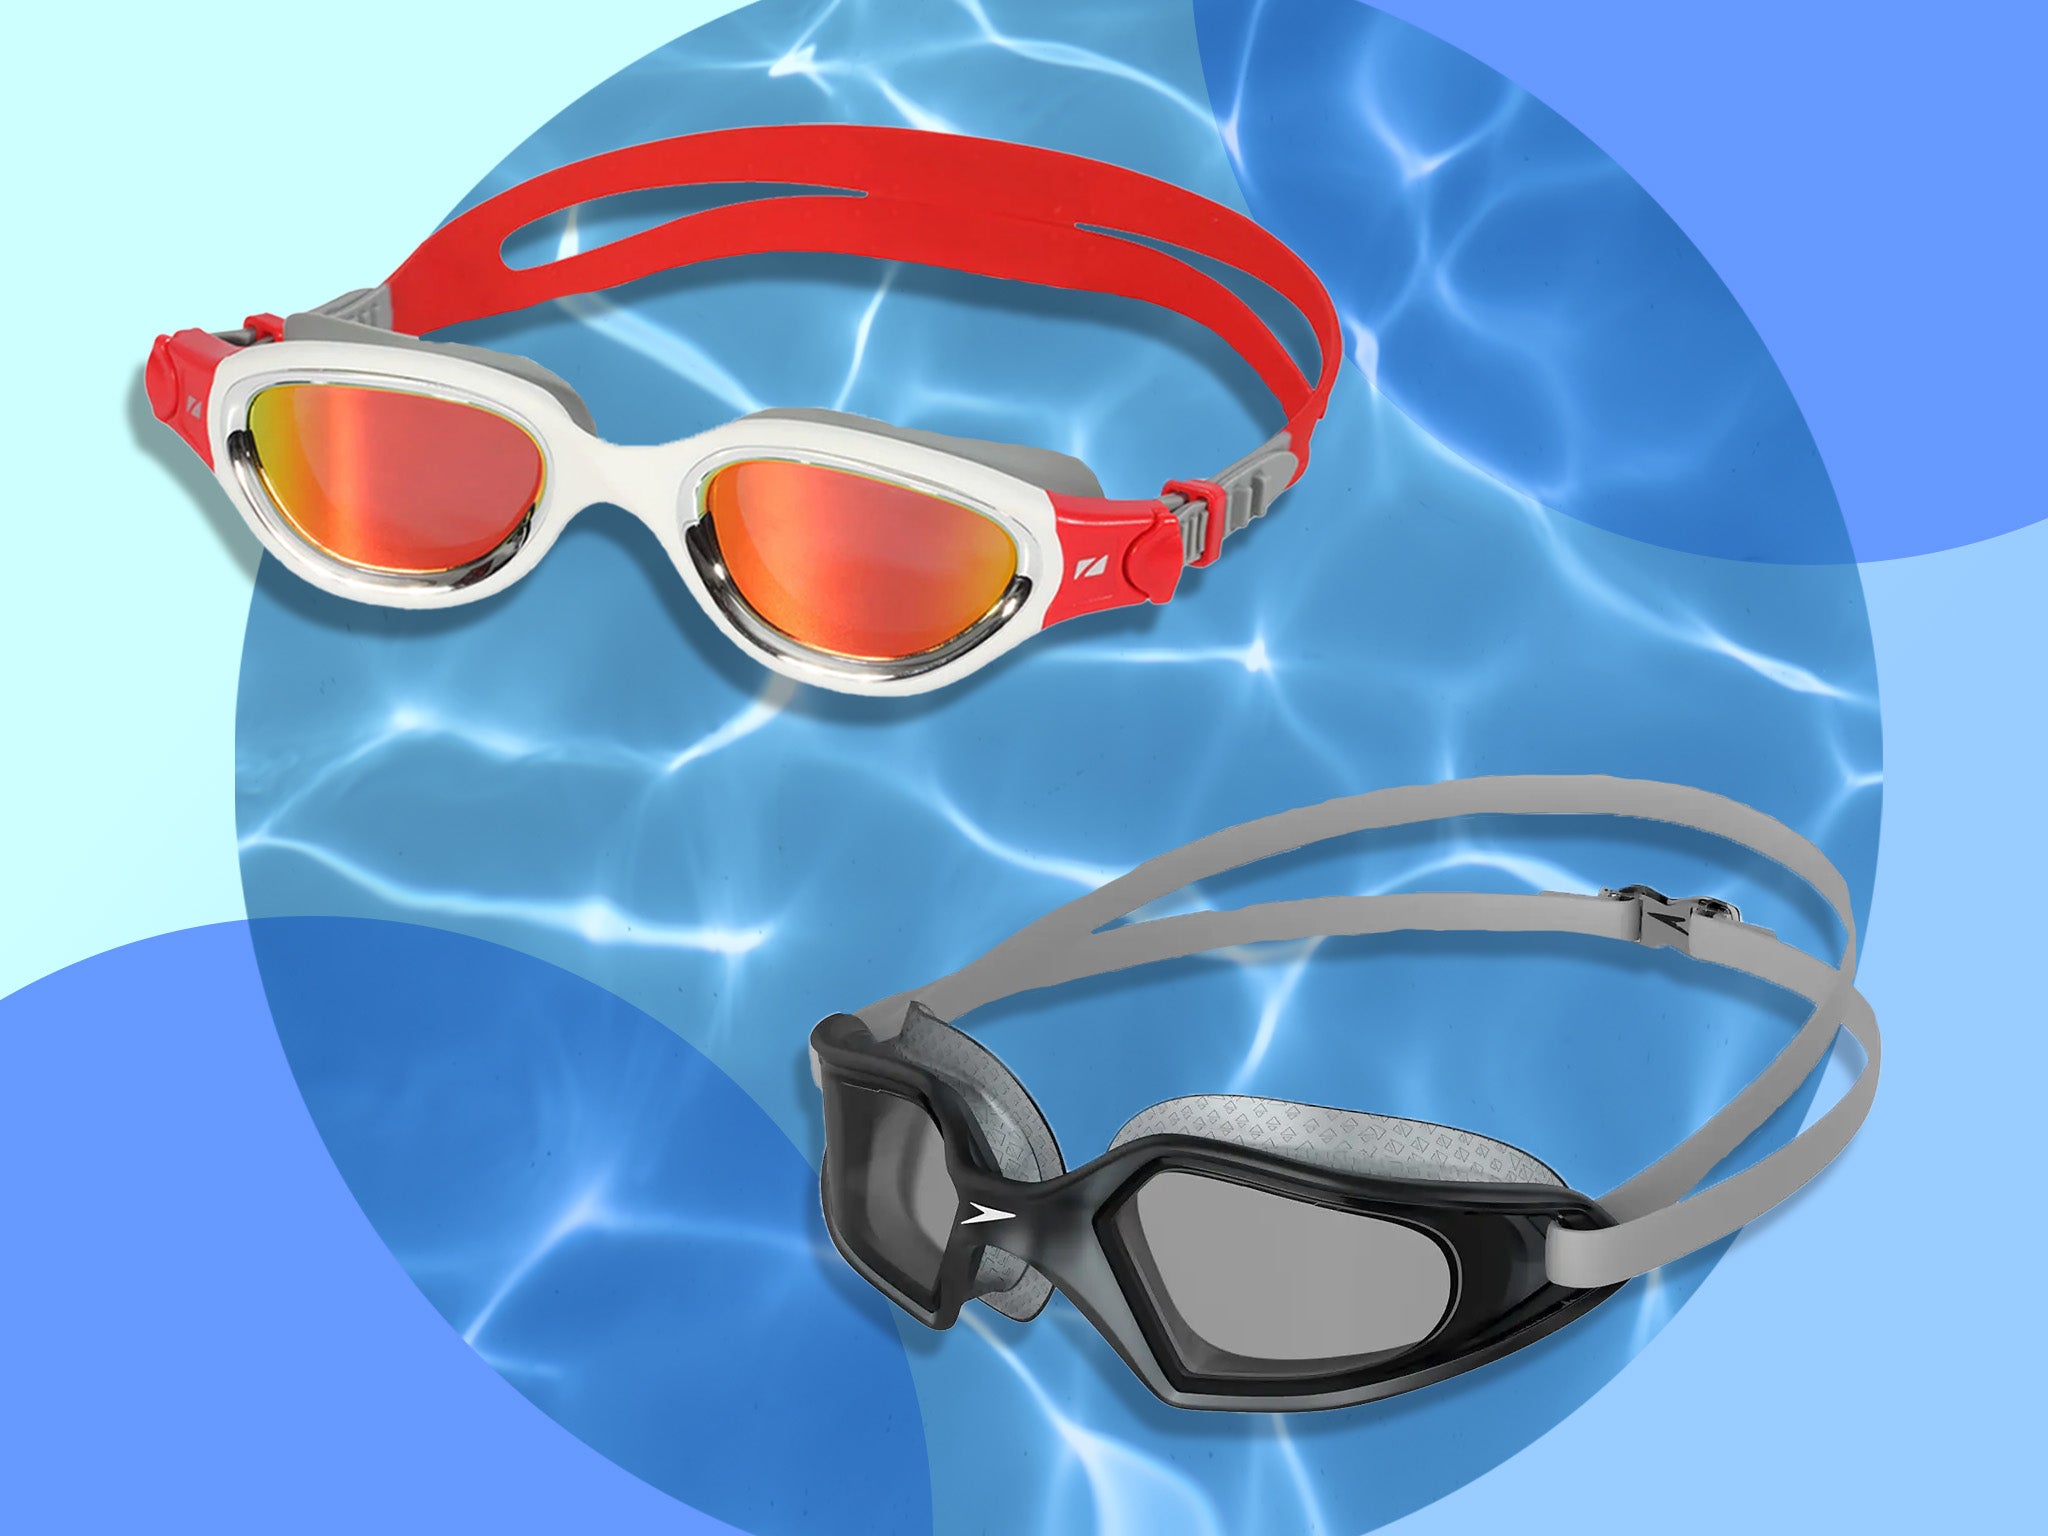 Gaoominy Adult Non-Fogging Anti UV Swimming Goggles Swim Glasses Adjustable For Women men 